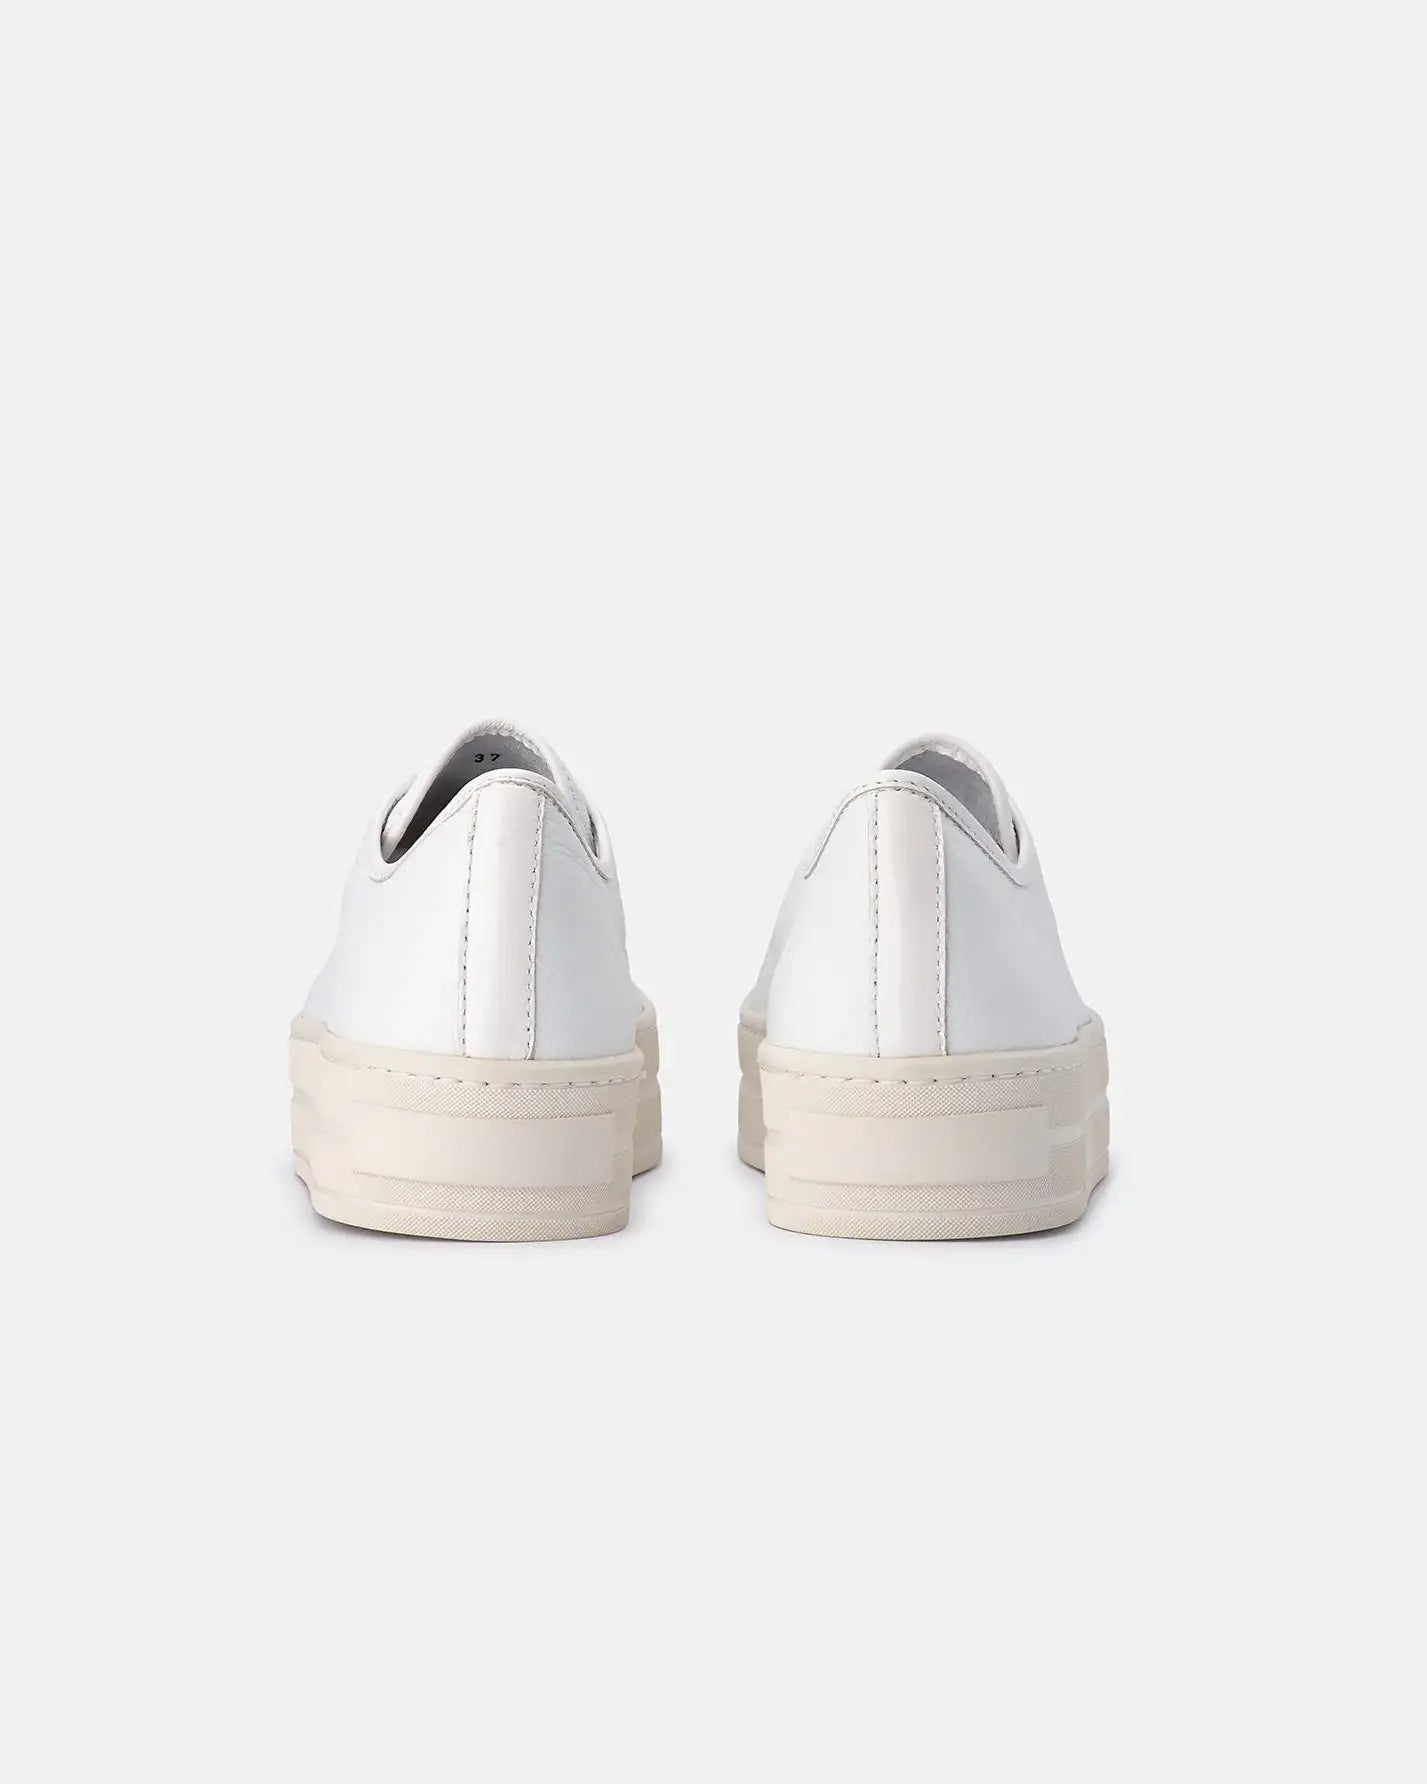 DOF Studios Ariana Platform Sneaker - White